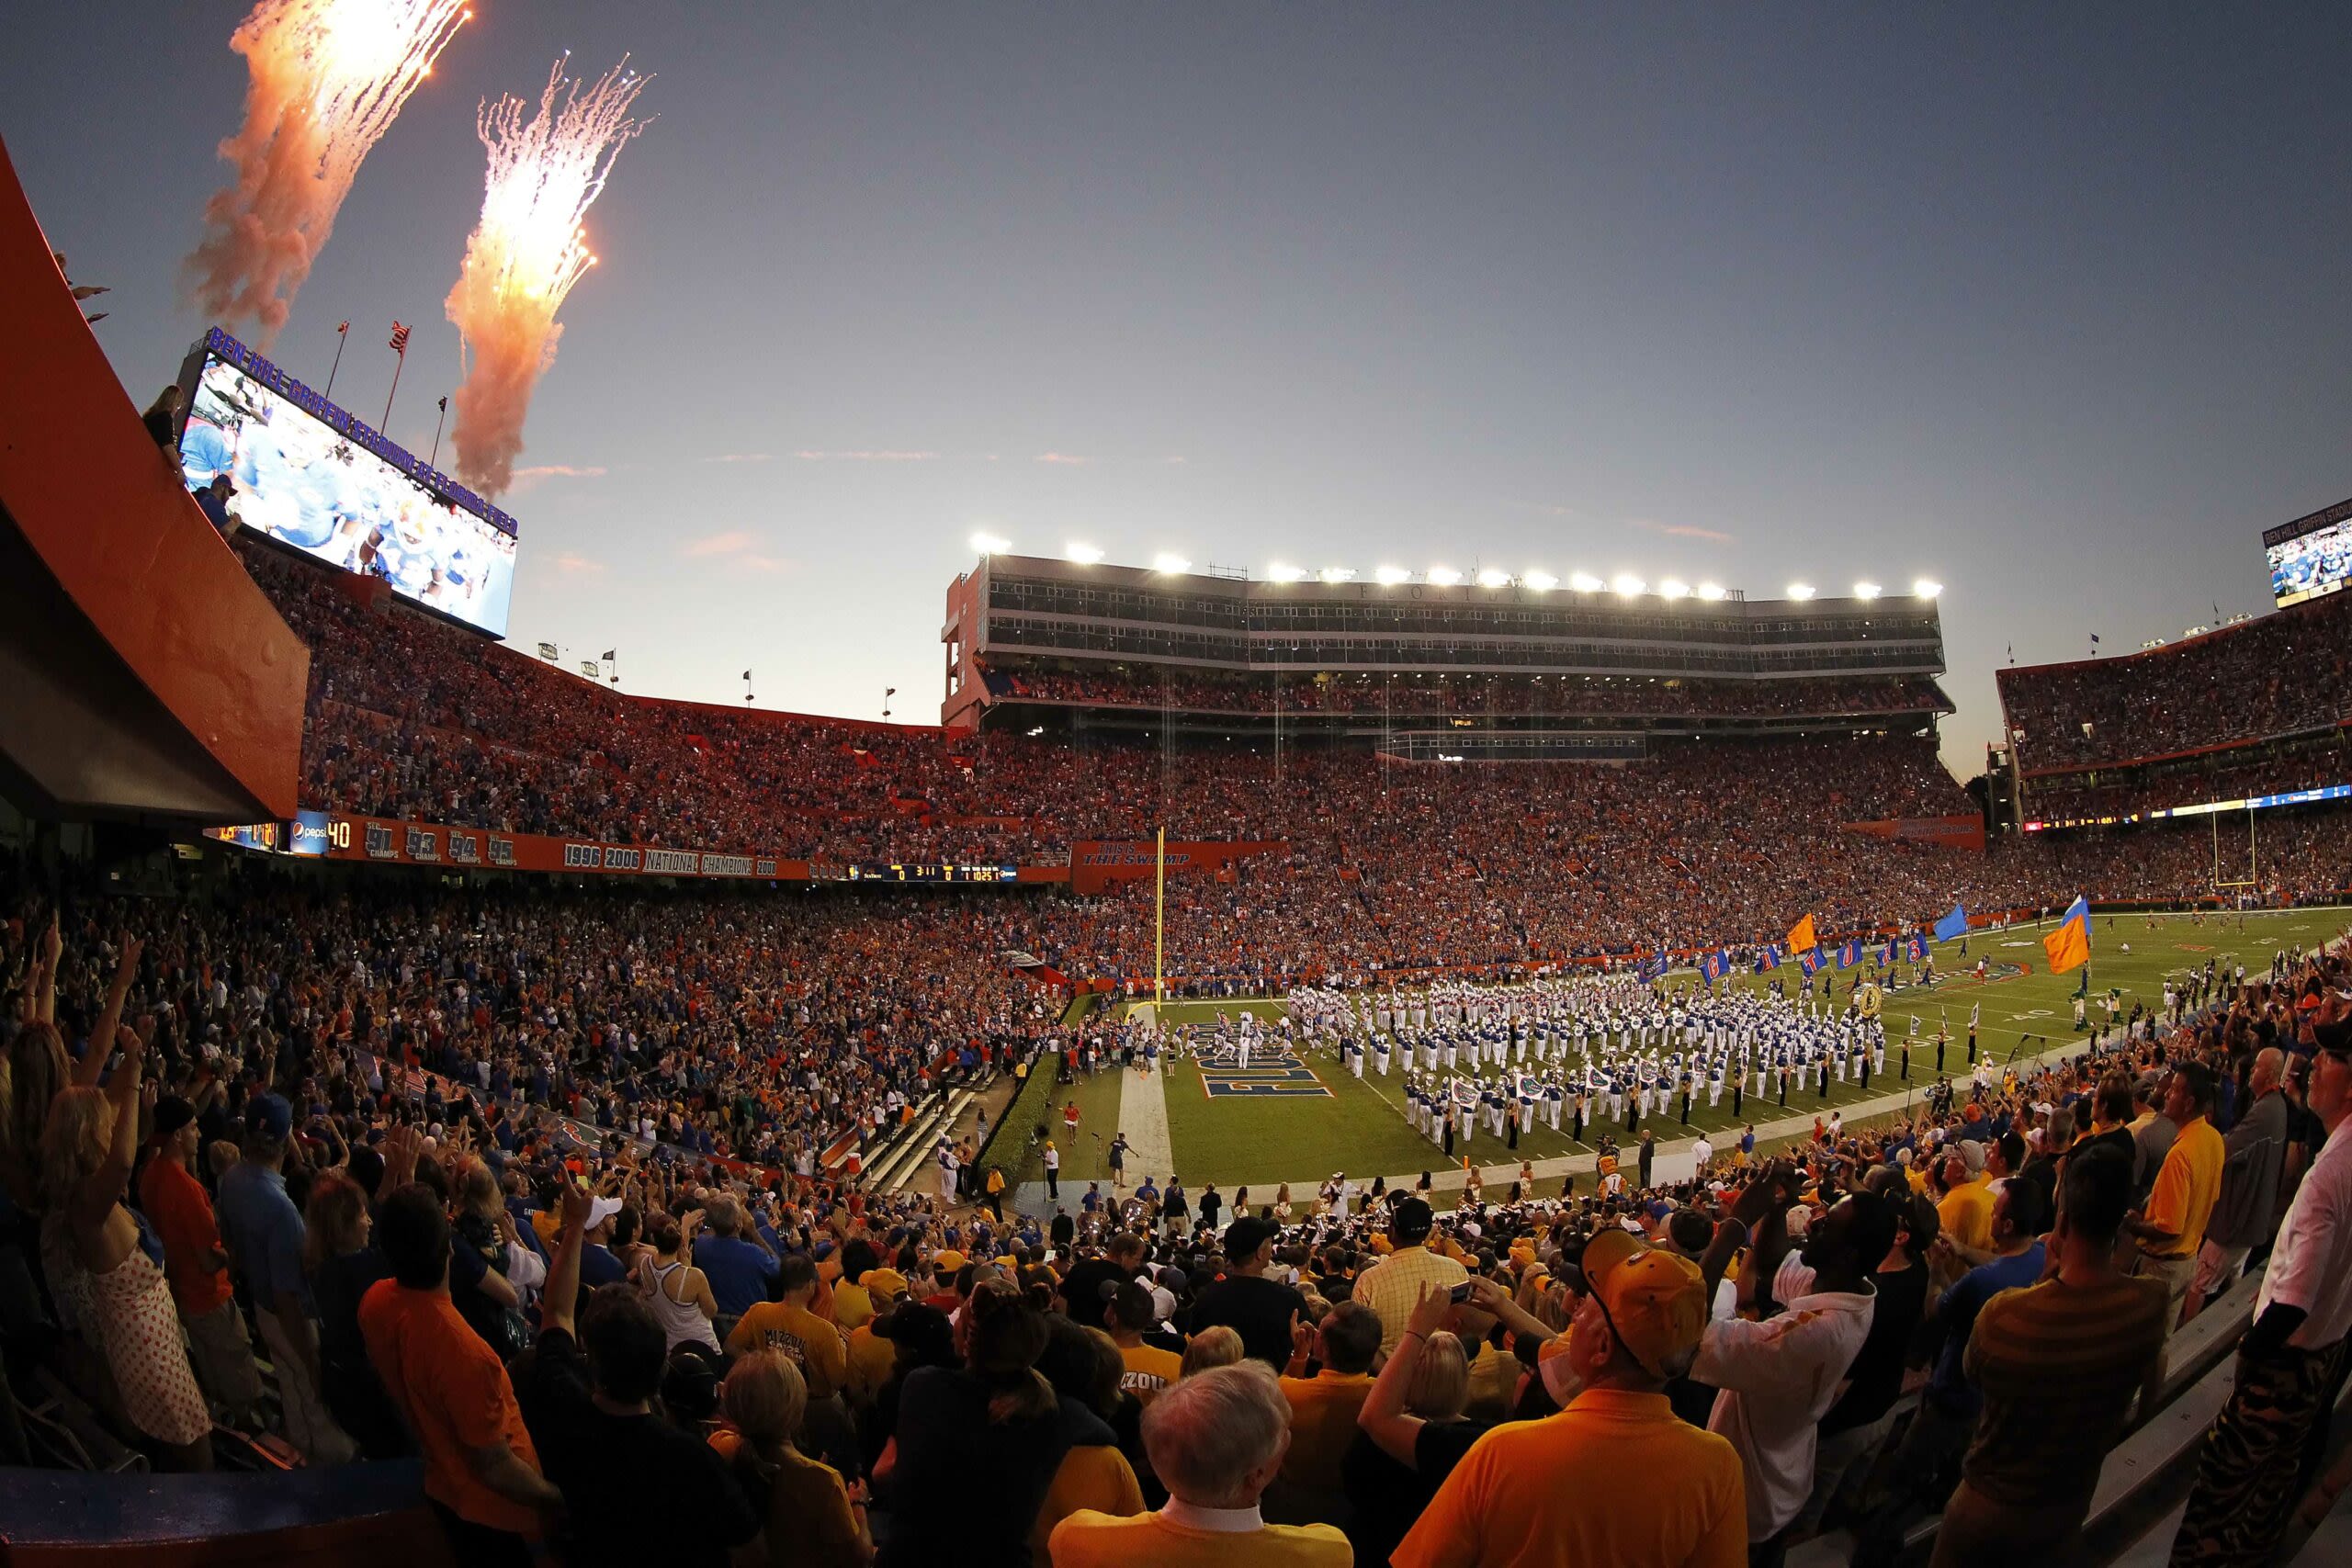 ESPN ranks the Swamp among top 25 college football stadiums